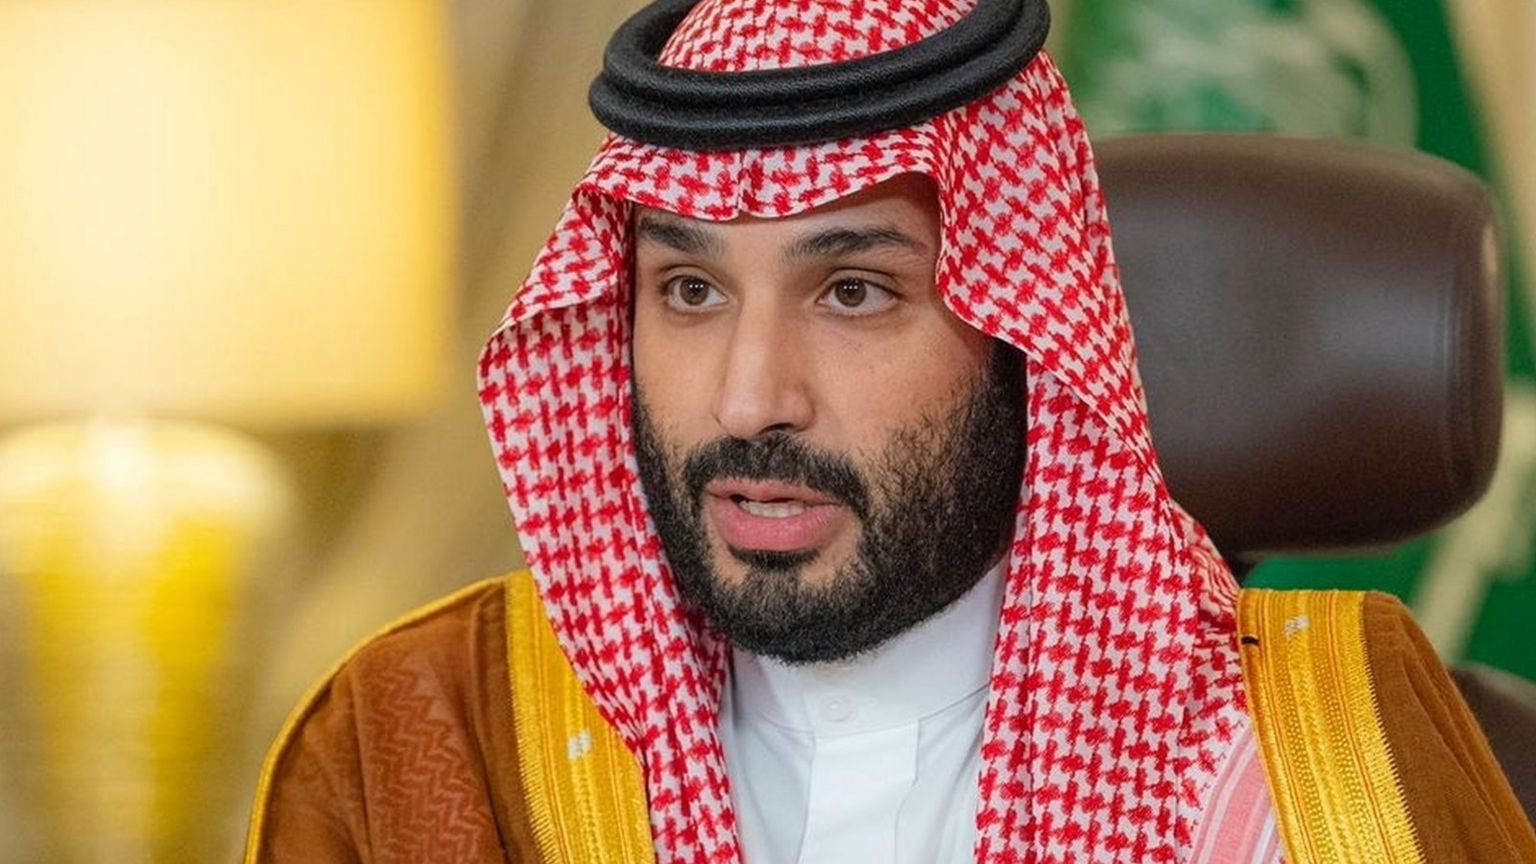 Принцы аль сауды. Мухаммед Бин Салман. Принц Салман Саудовская Аравия. Принц Саудовской Аравии Мухаммед ибн Салман. Мухаммед ибн Салман в Саудовской Аравии.